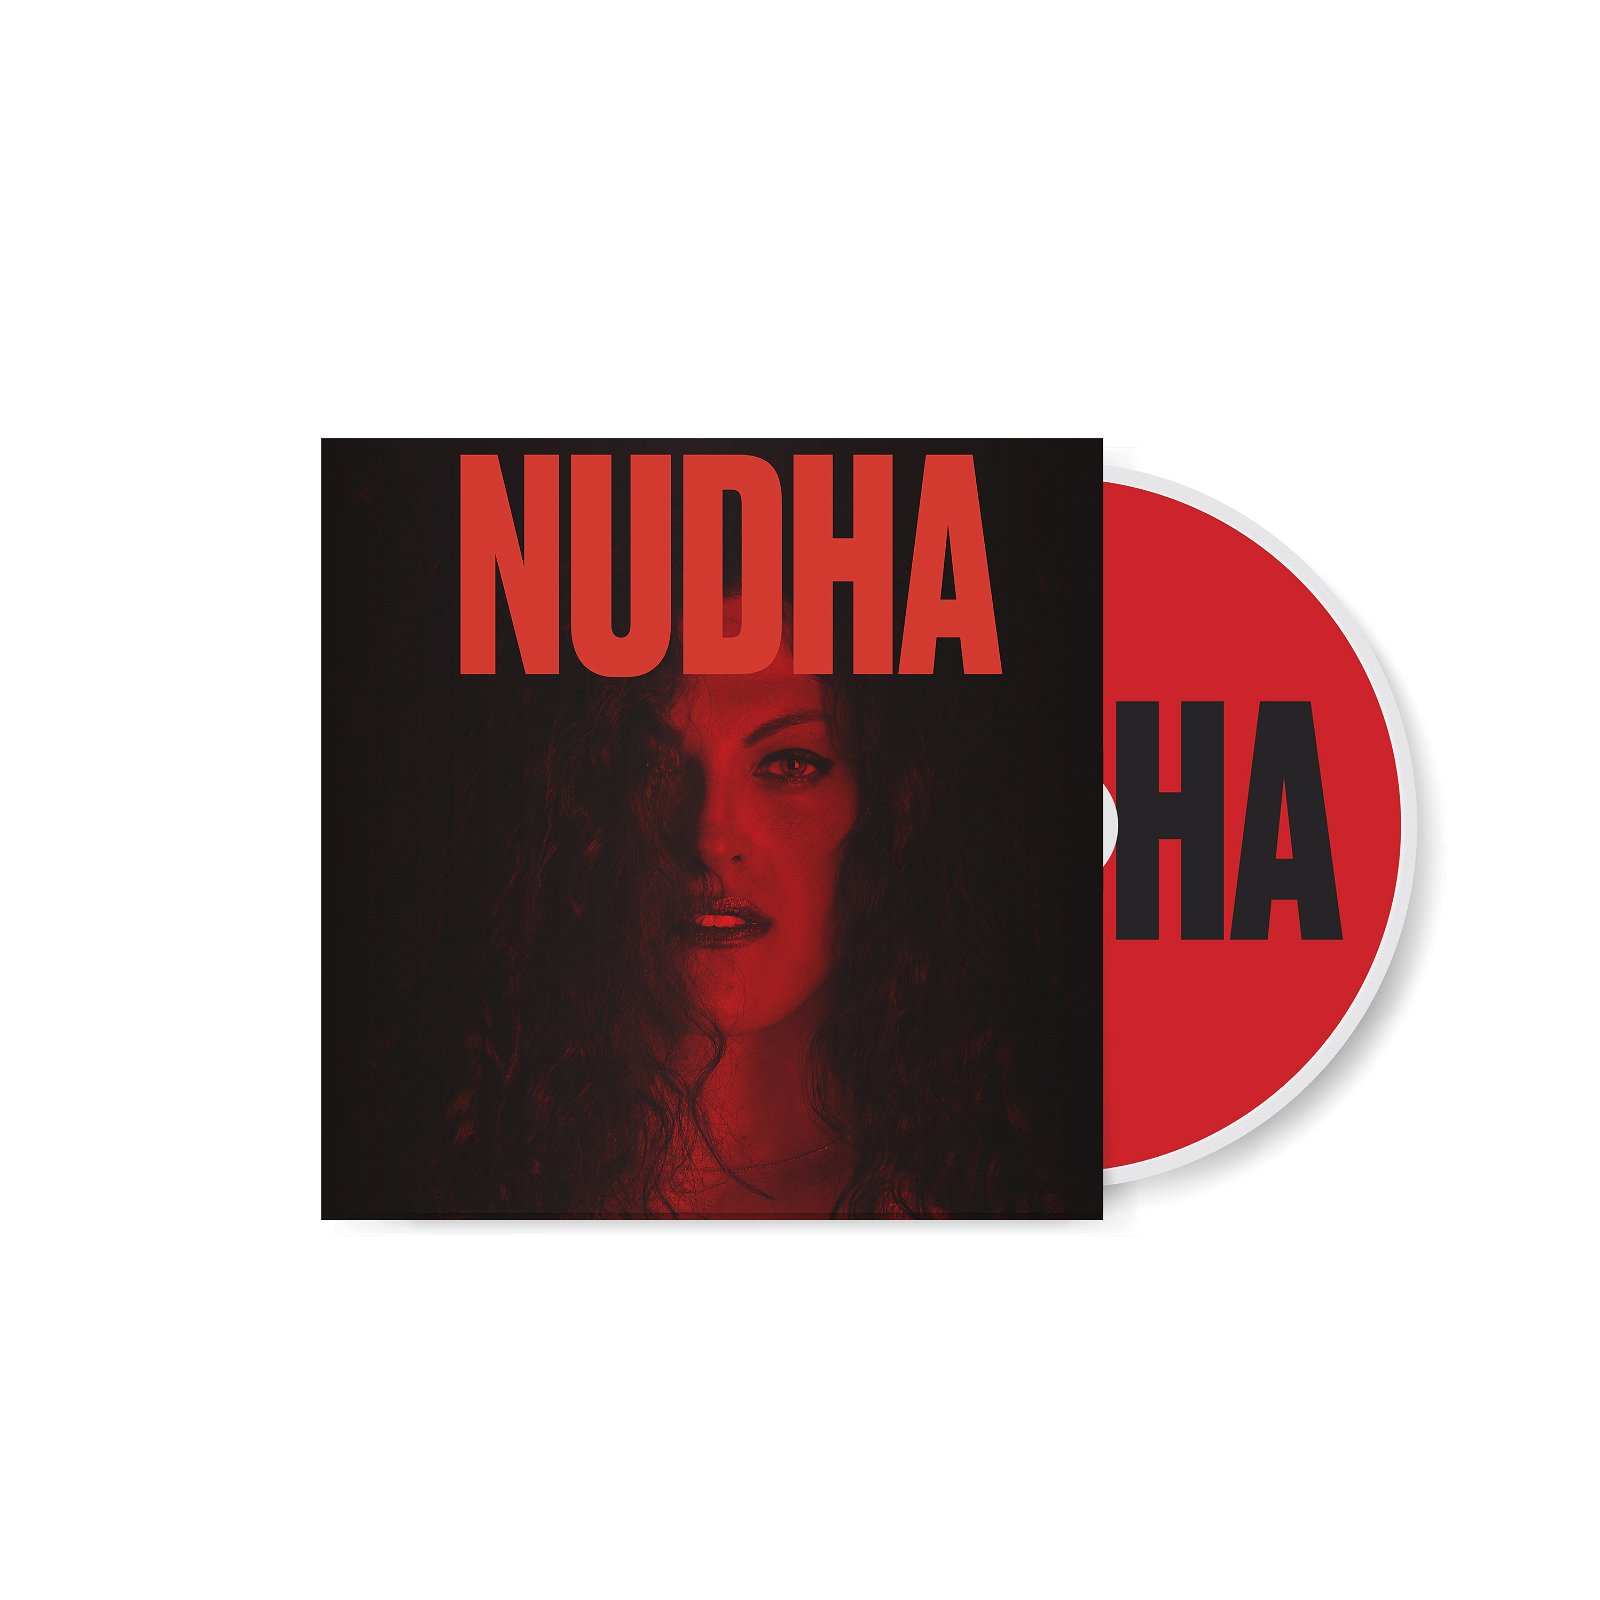 CD Shop - NUDHA NUDHA